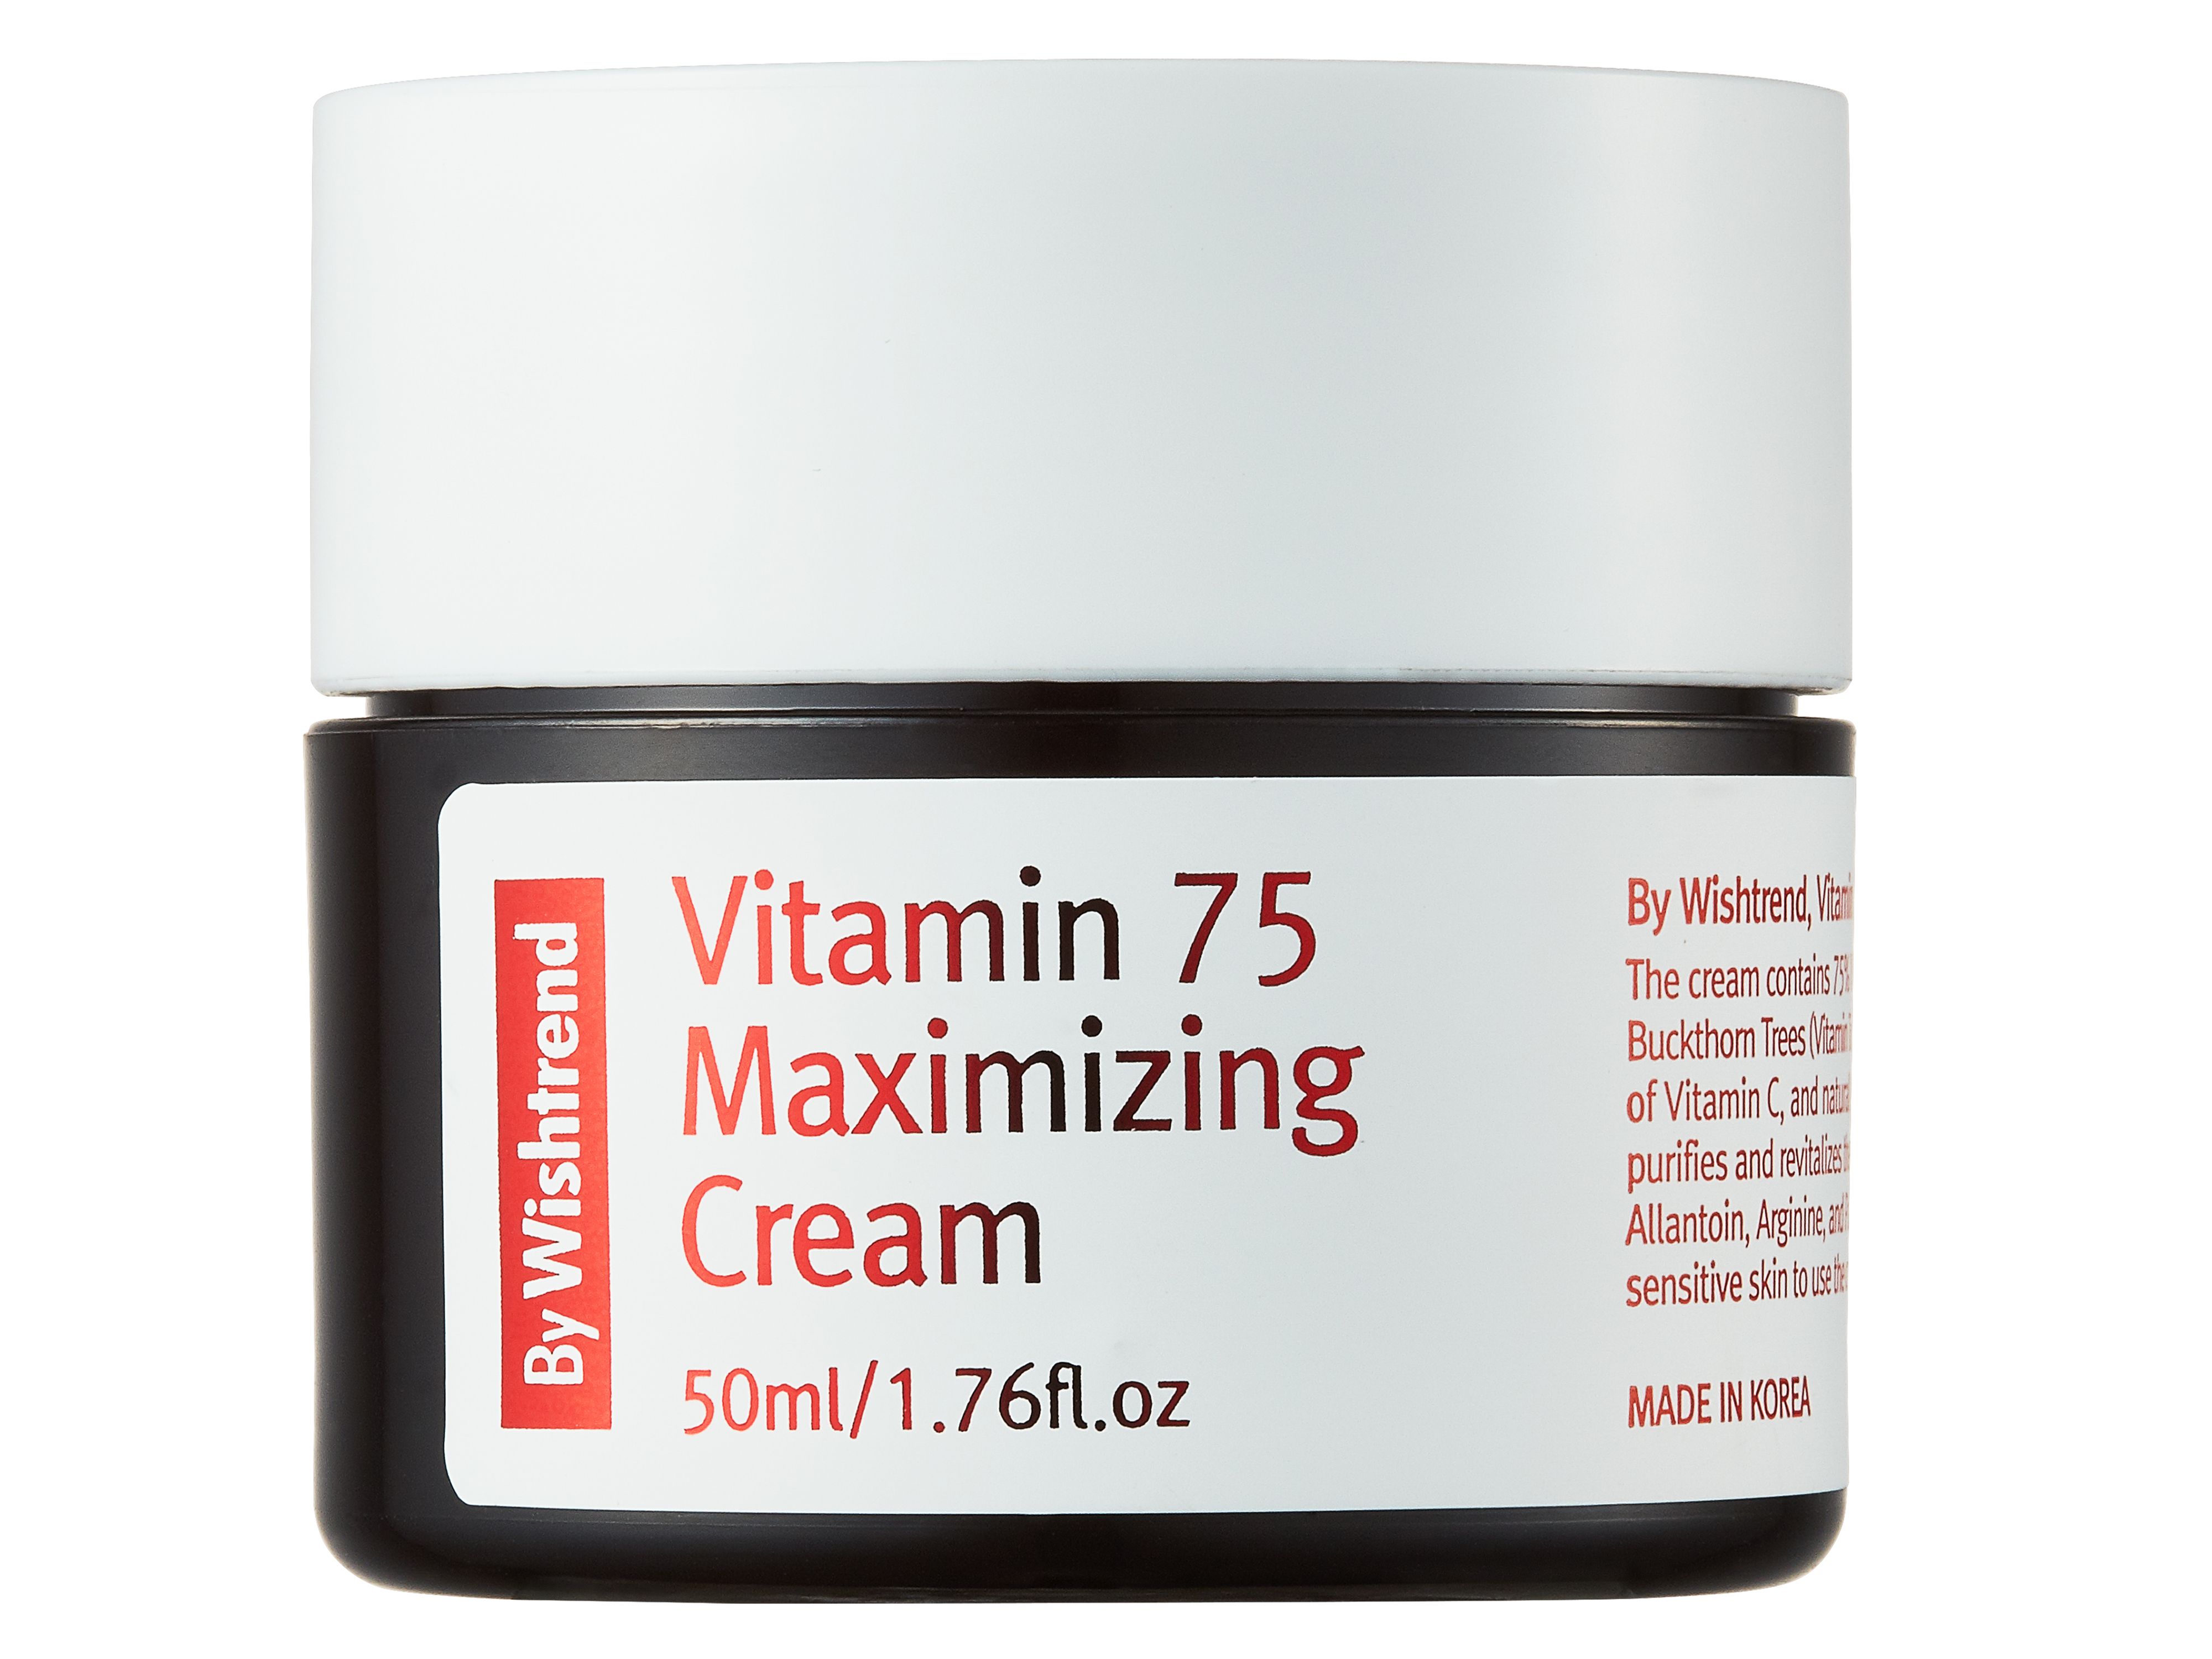 By Wishtrend Vitamin 75 Maximizing Cream, 50 ml